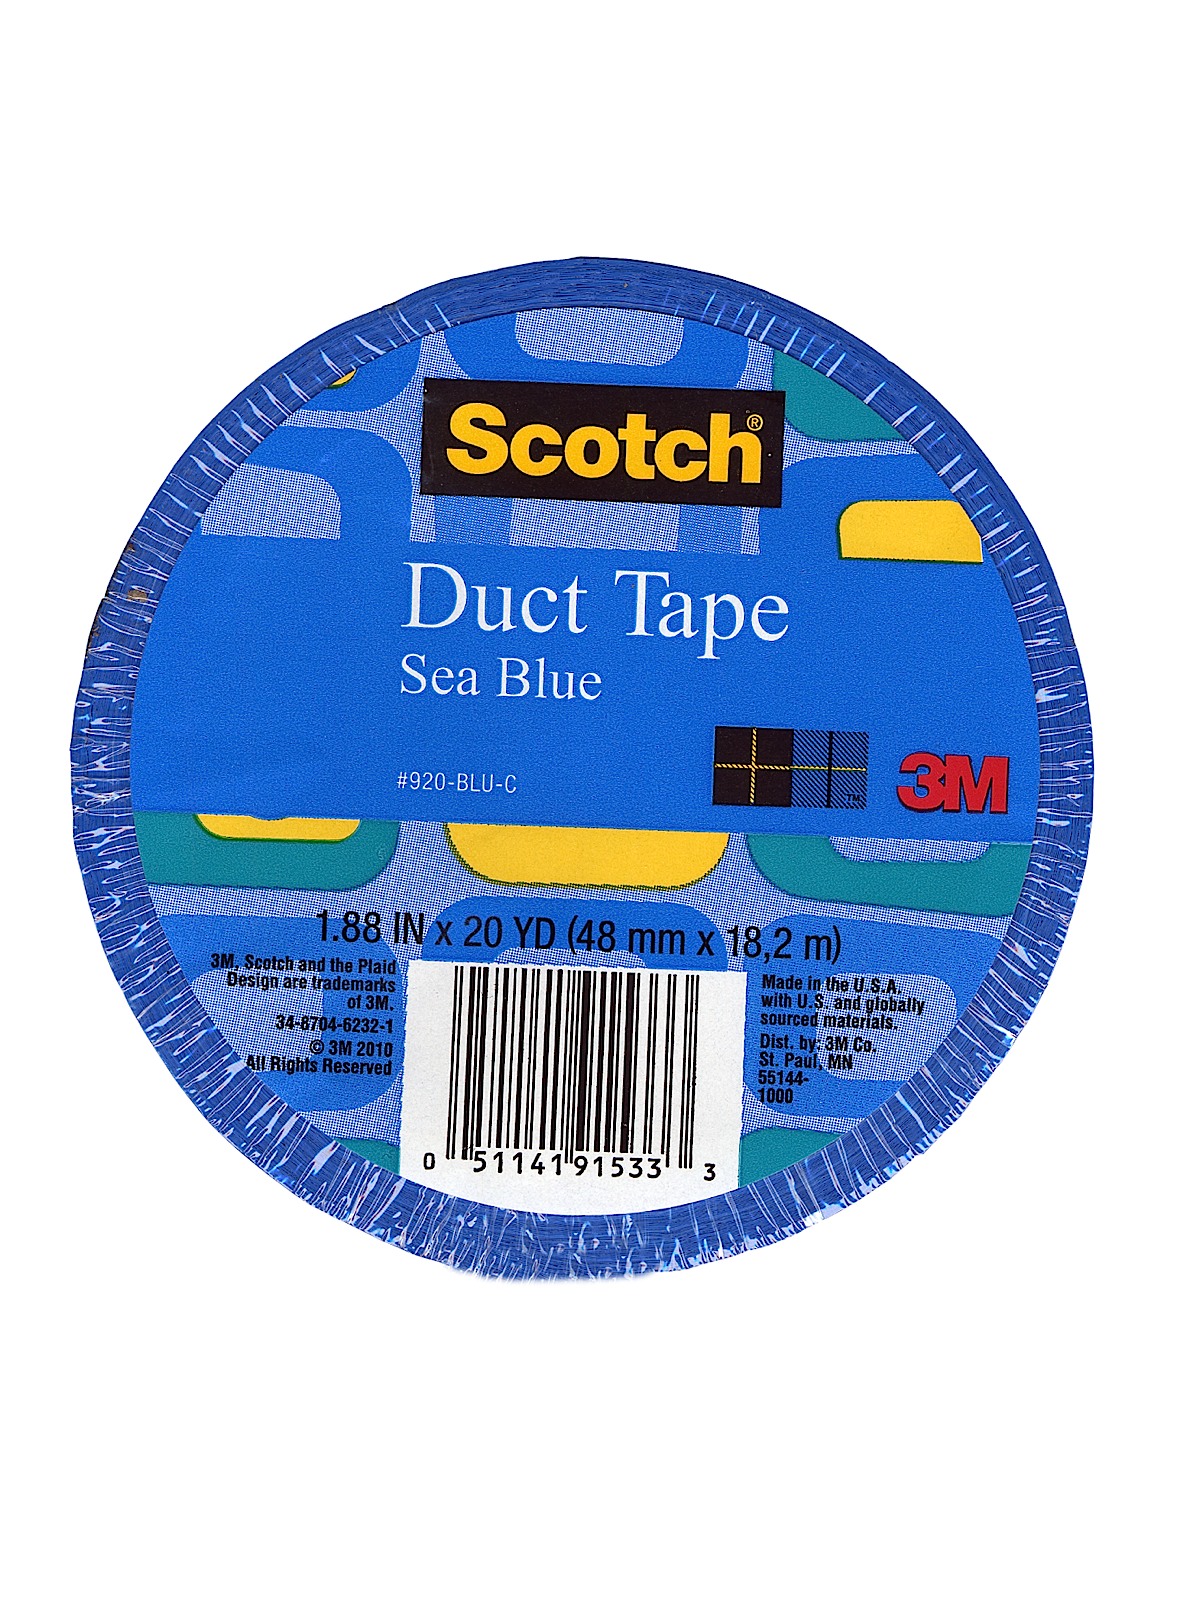 Colored Duct Tape Sea Blue 1.88 In. X 20 Yd. Roll 920-BLU-C